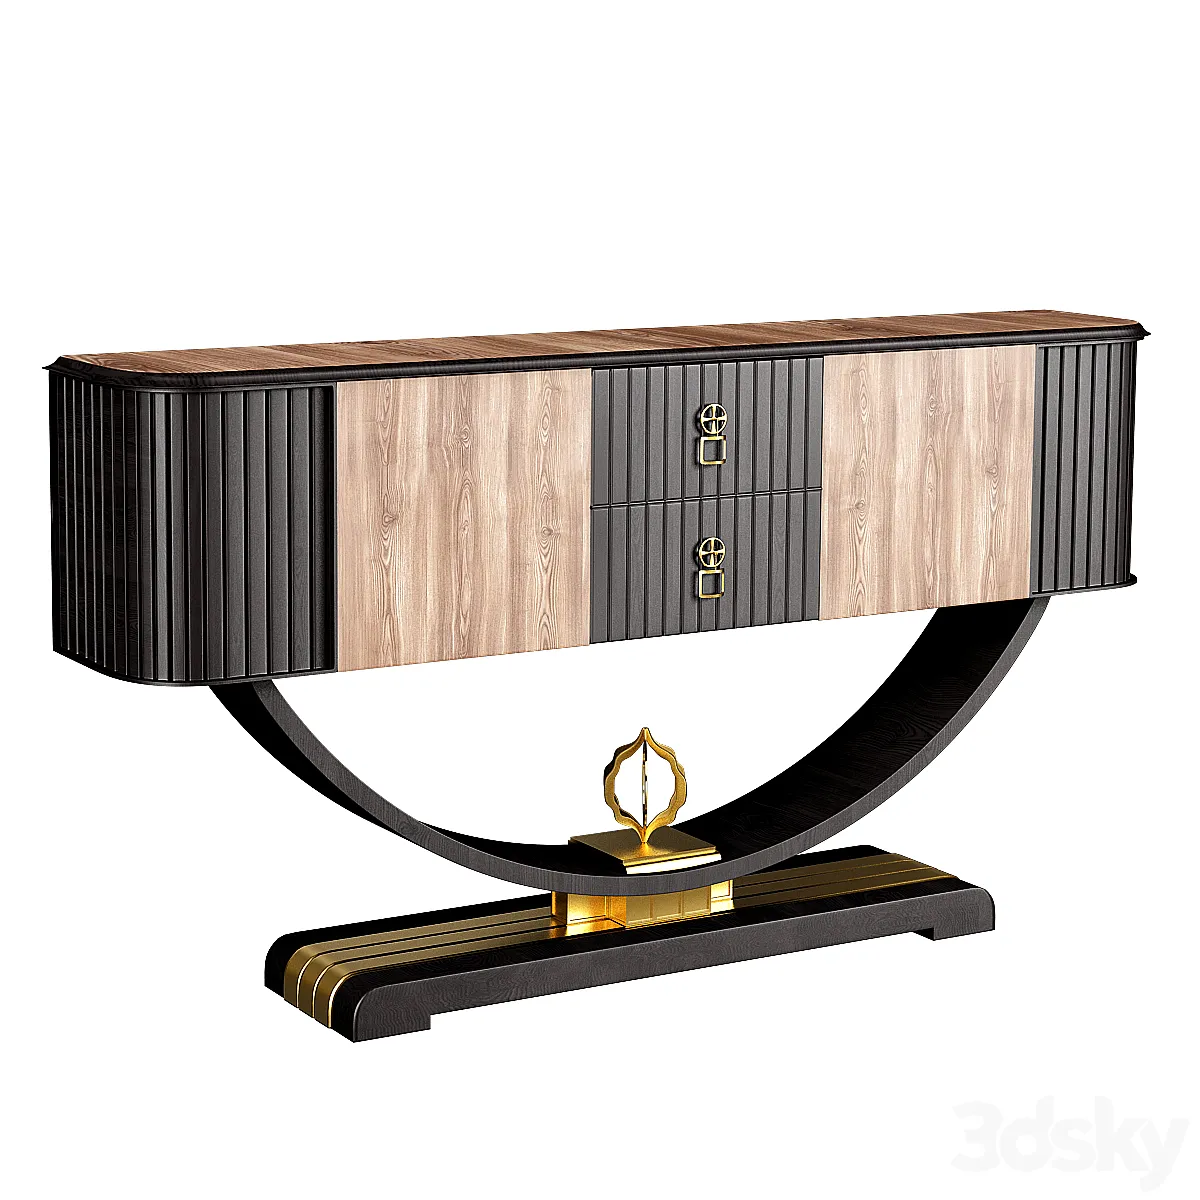 3dsky - Swing bruno zampa - Sideboard & Chest of drawer - 3D model